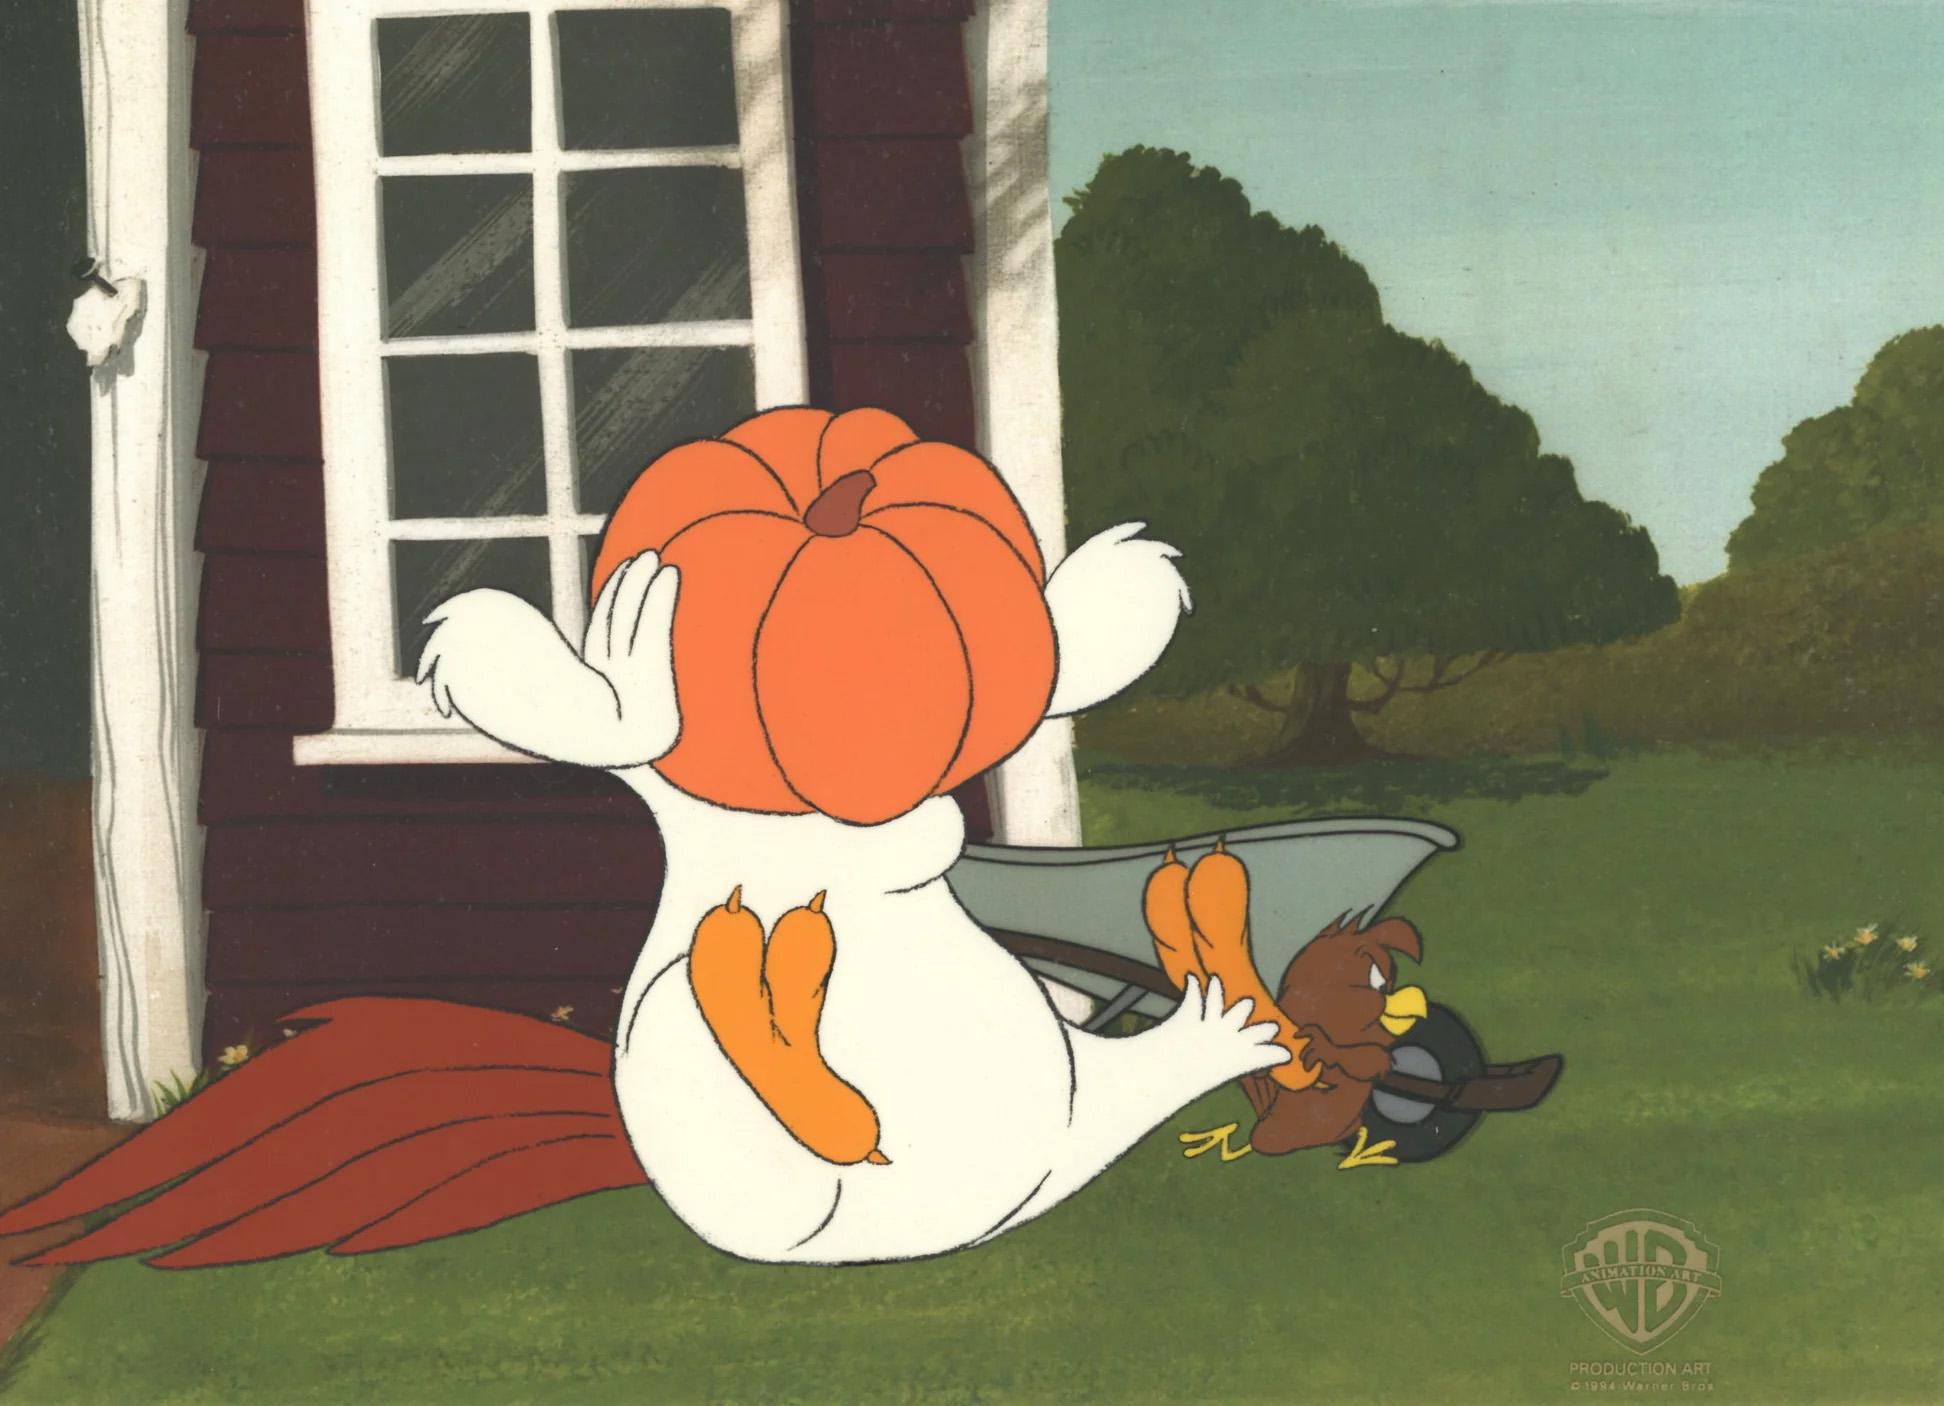 Looney Tunes Original Production Cel: Foghorn Leghorn and Henery Hawk - Art by Looney Tunes Studio Artists